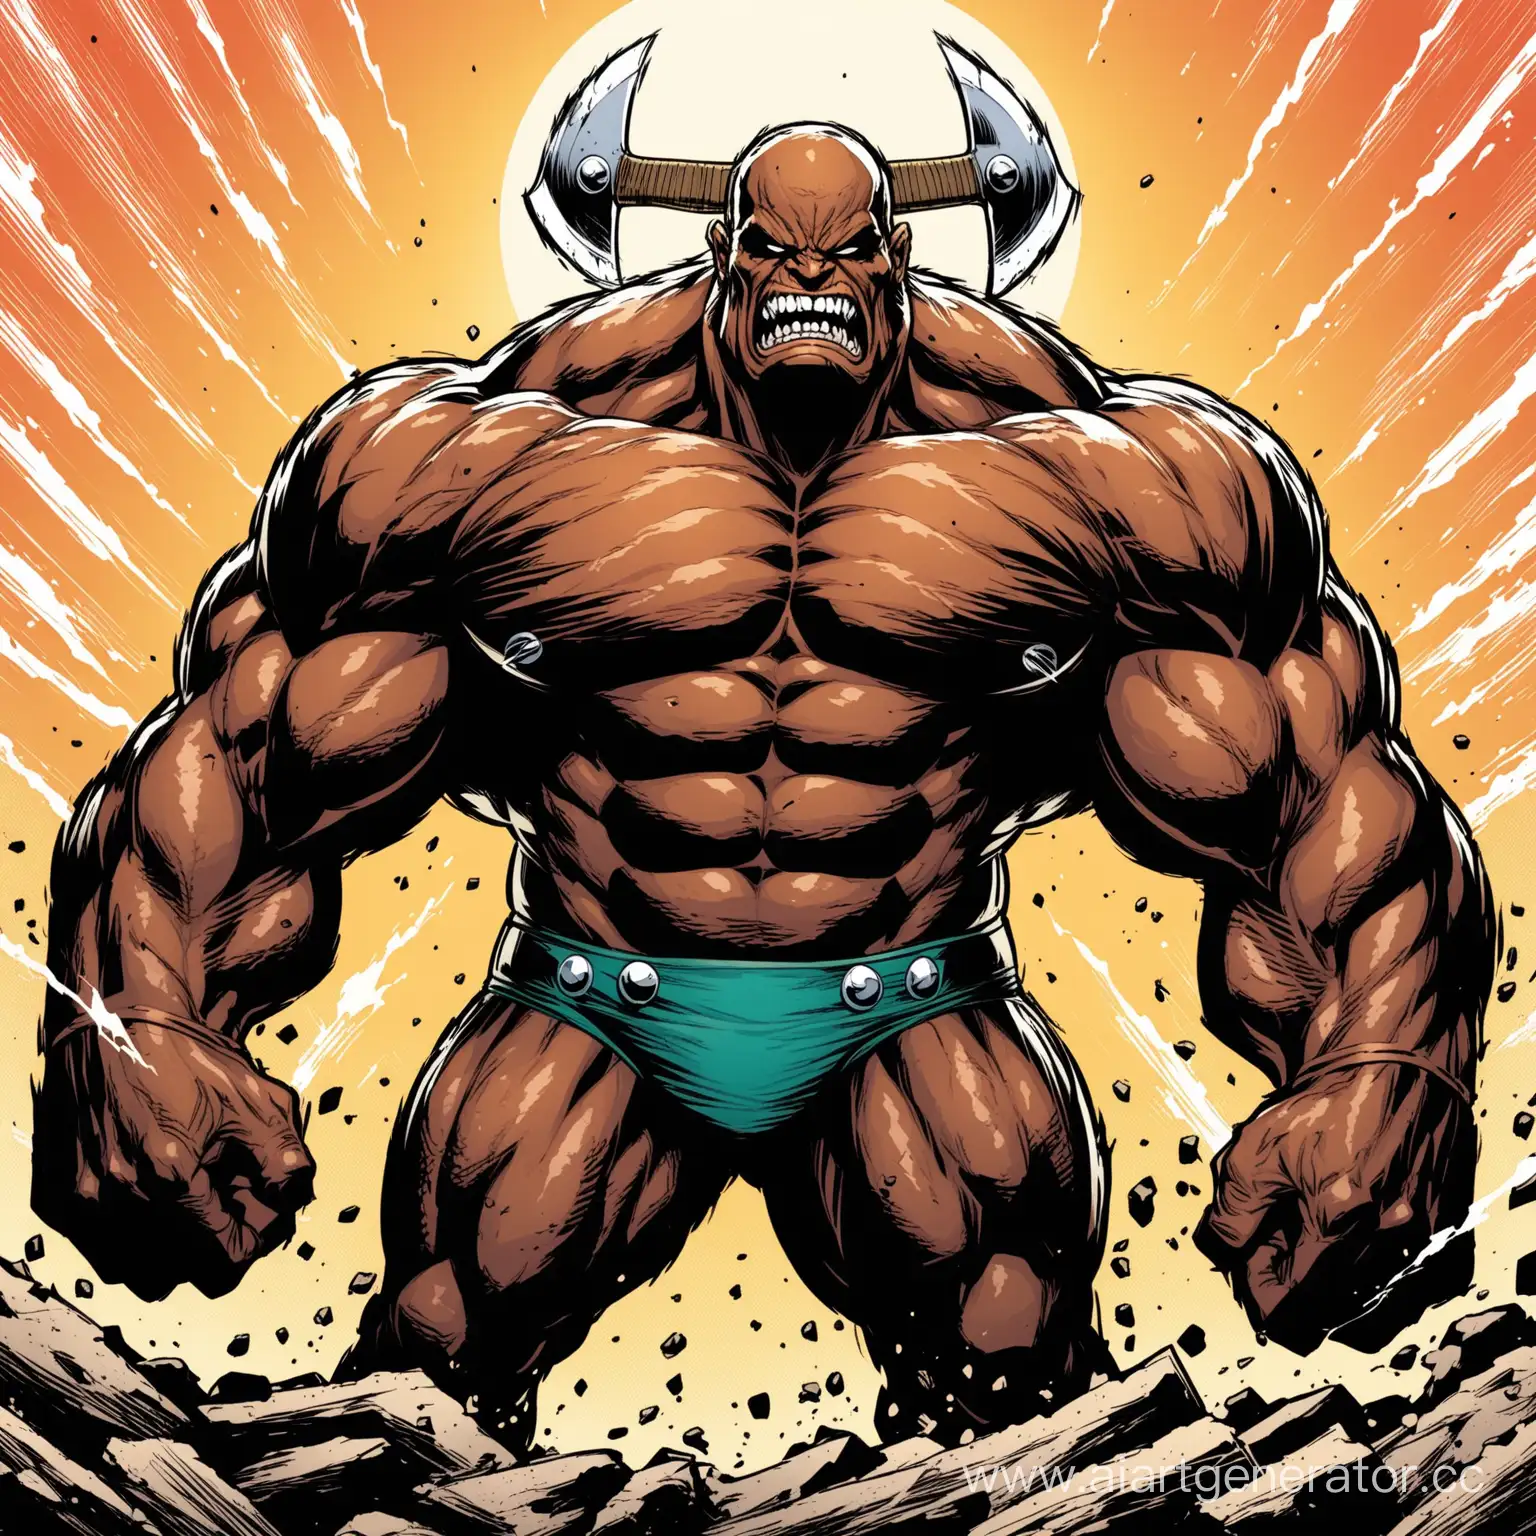 Mighty-Goliath-Warrior-Wielding-Axe-Marvel-Comics-Style